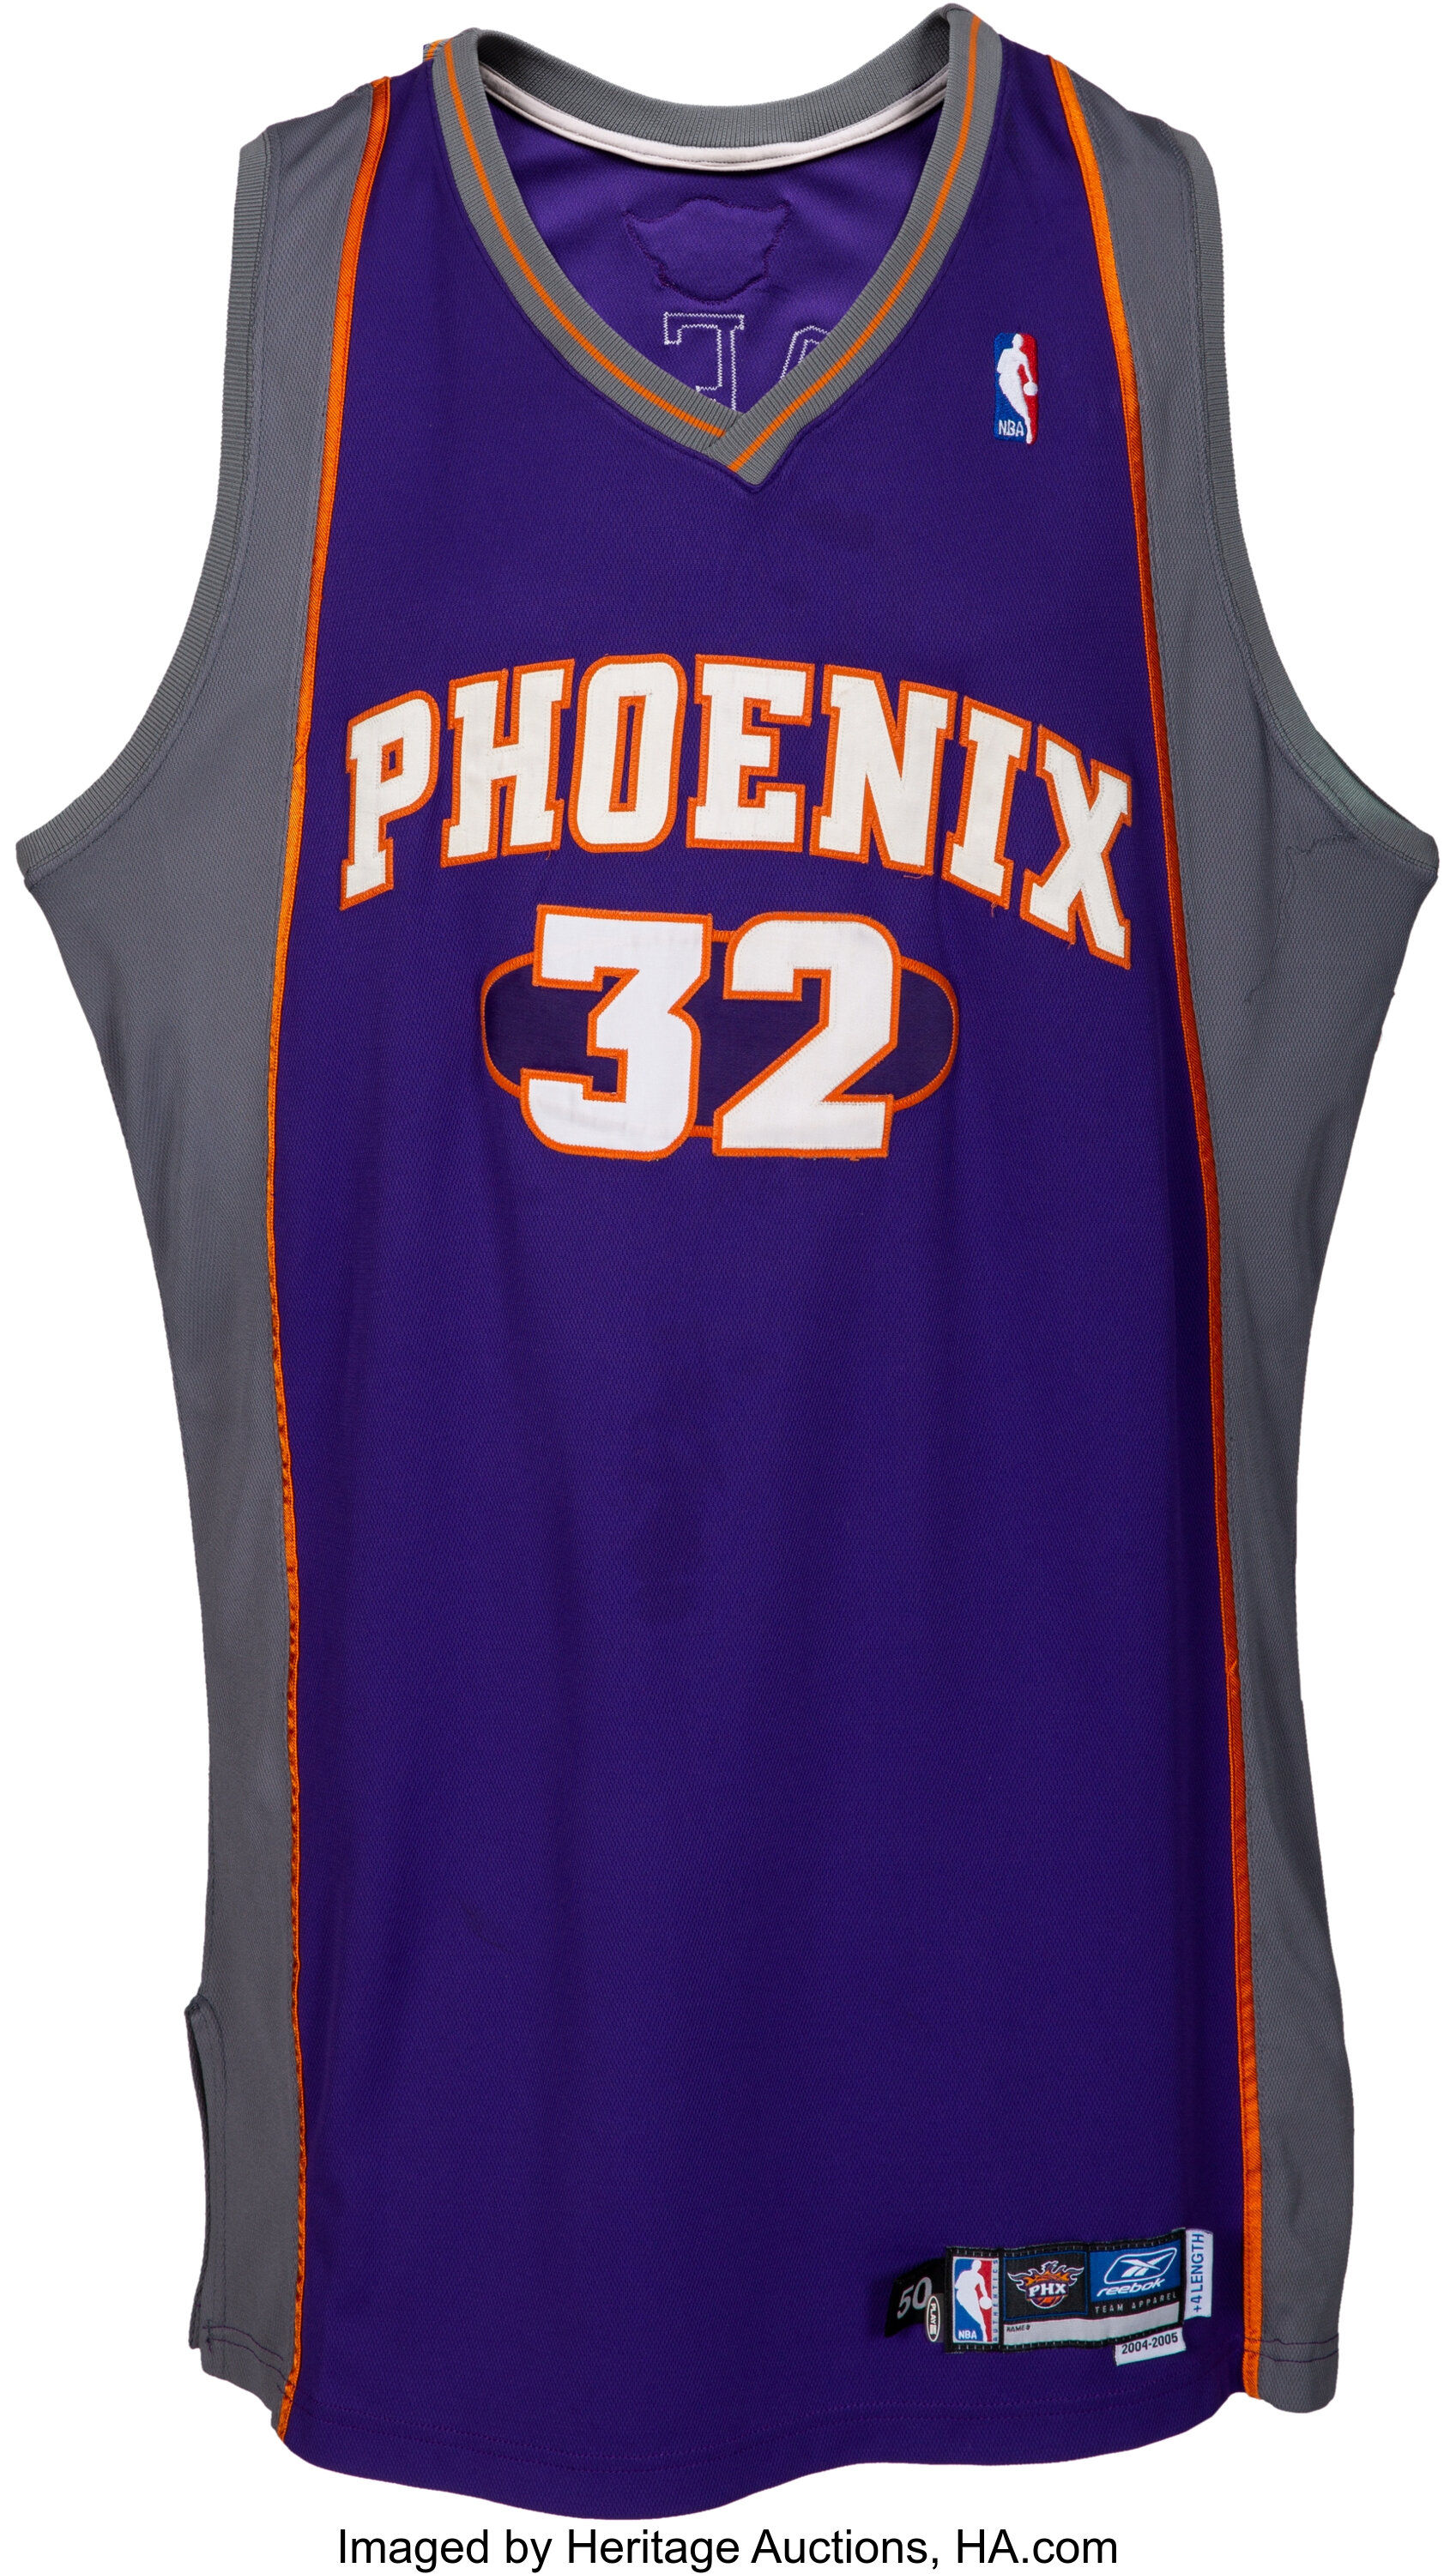 Amar'e Stoudemire Signed Phoenix Suns Jersey (JSA COA)